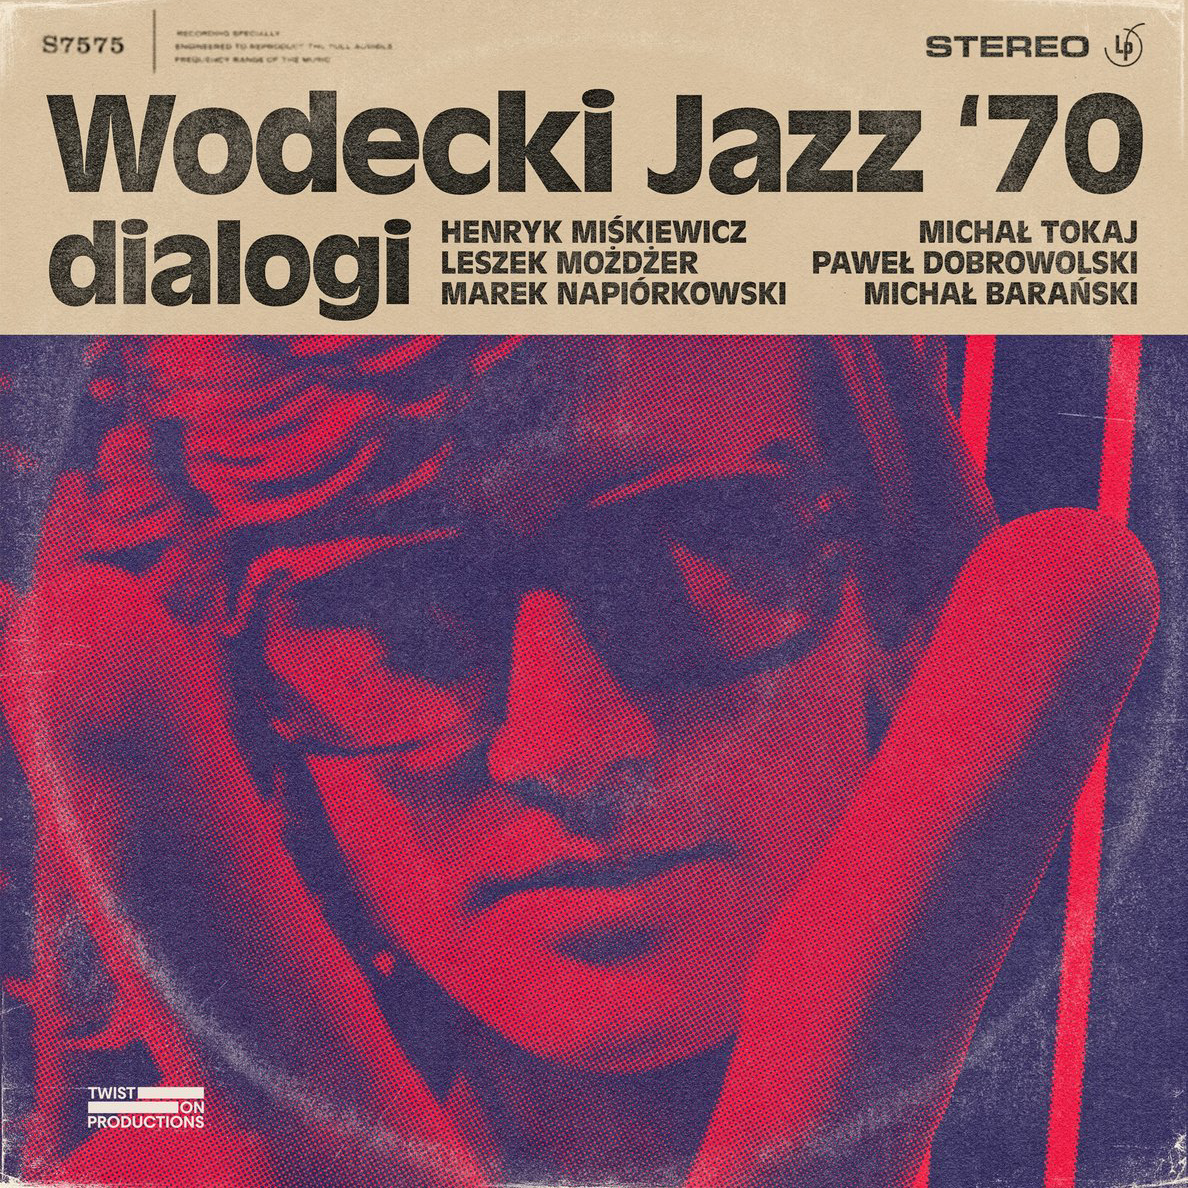 Wodecki Jazz '70 dialogi.